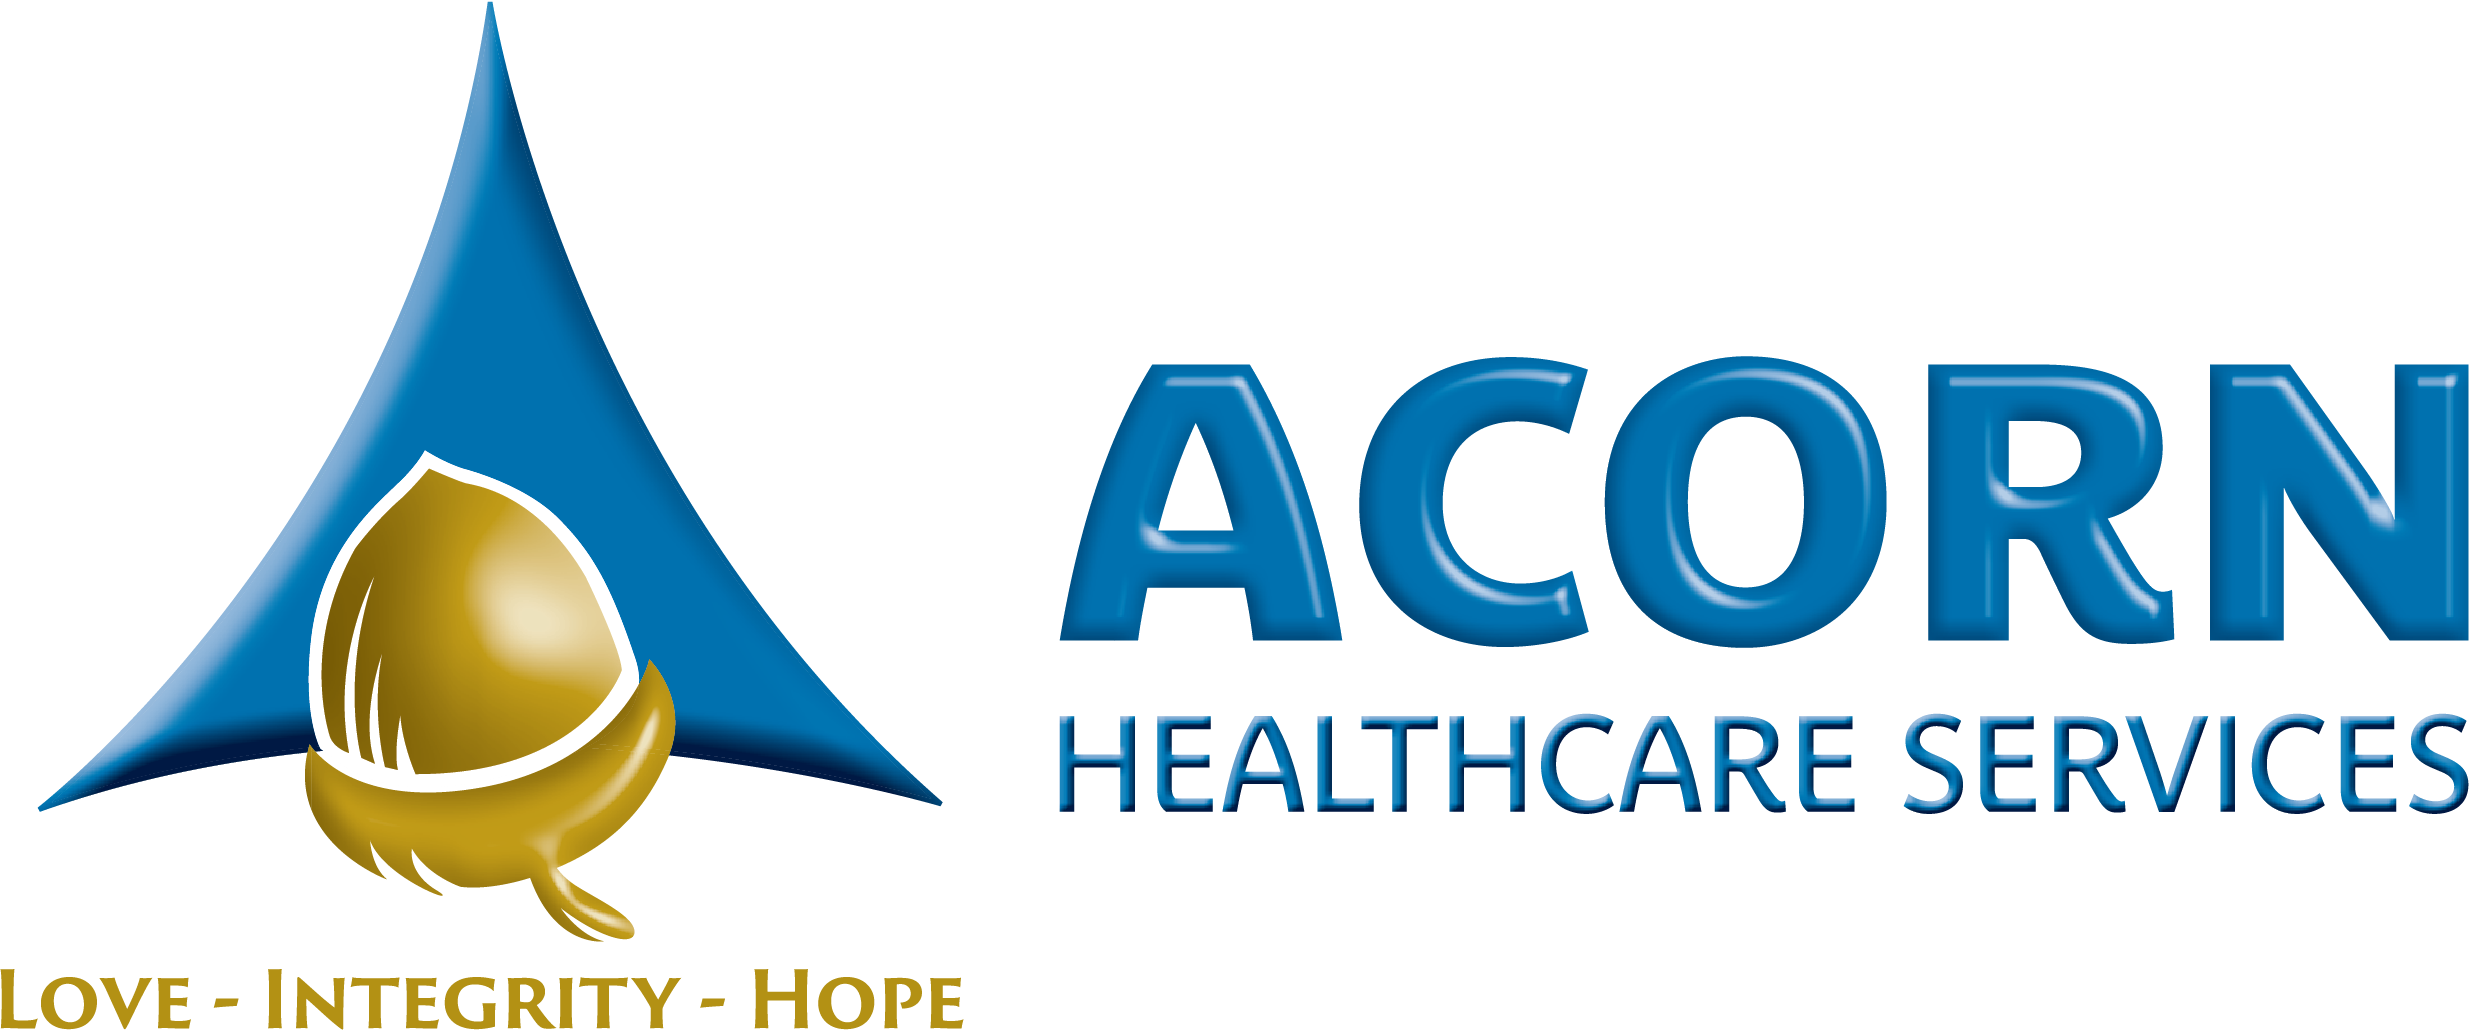 Acorn Healthcare Services, Inc.